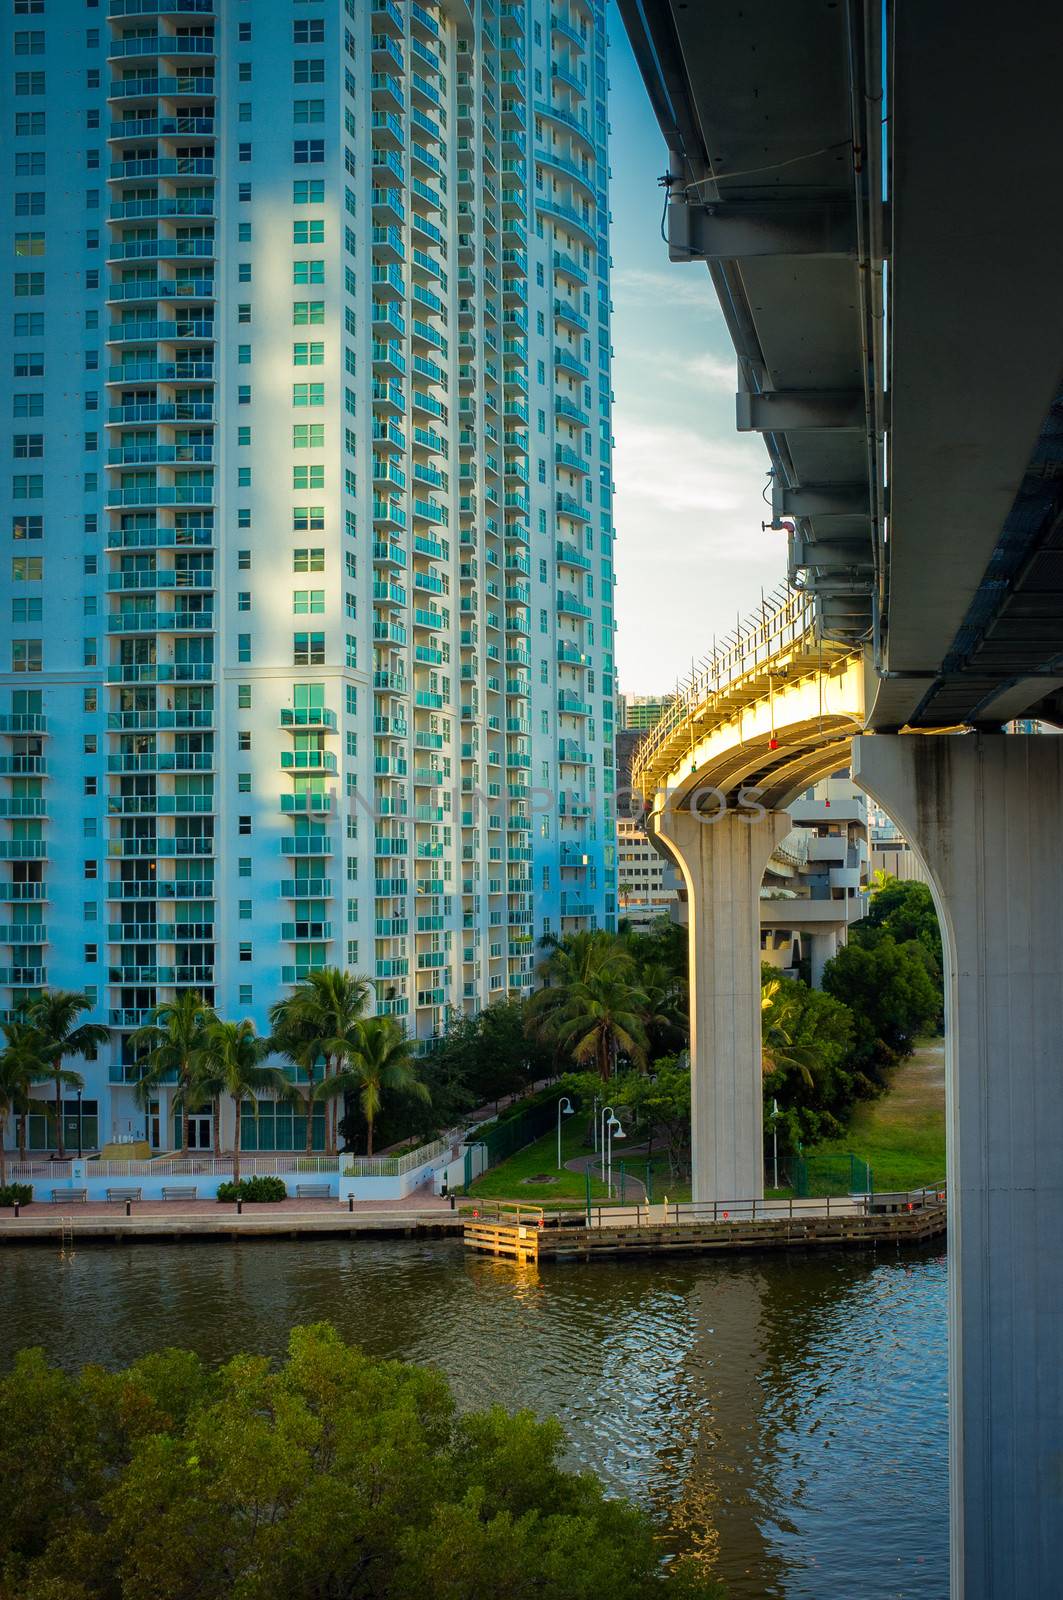 Buildings in a city, Downtown Miami, Miami, Florida, USA